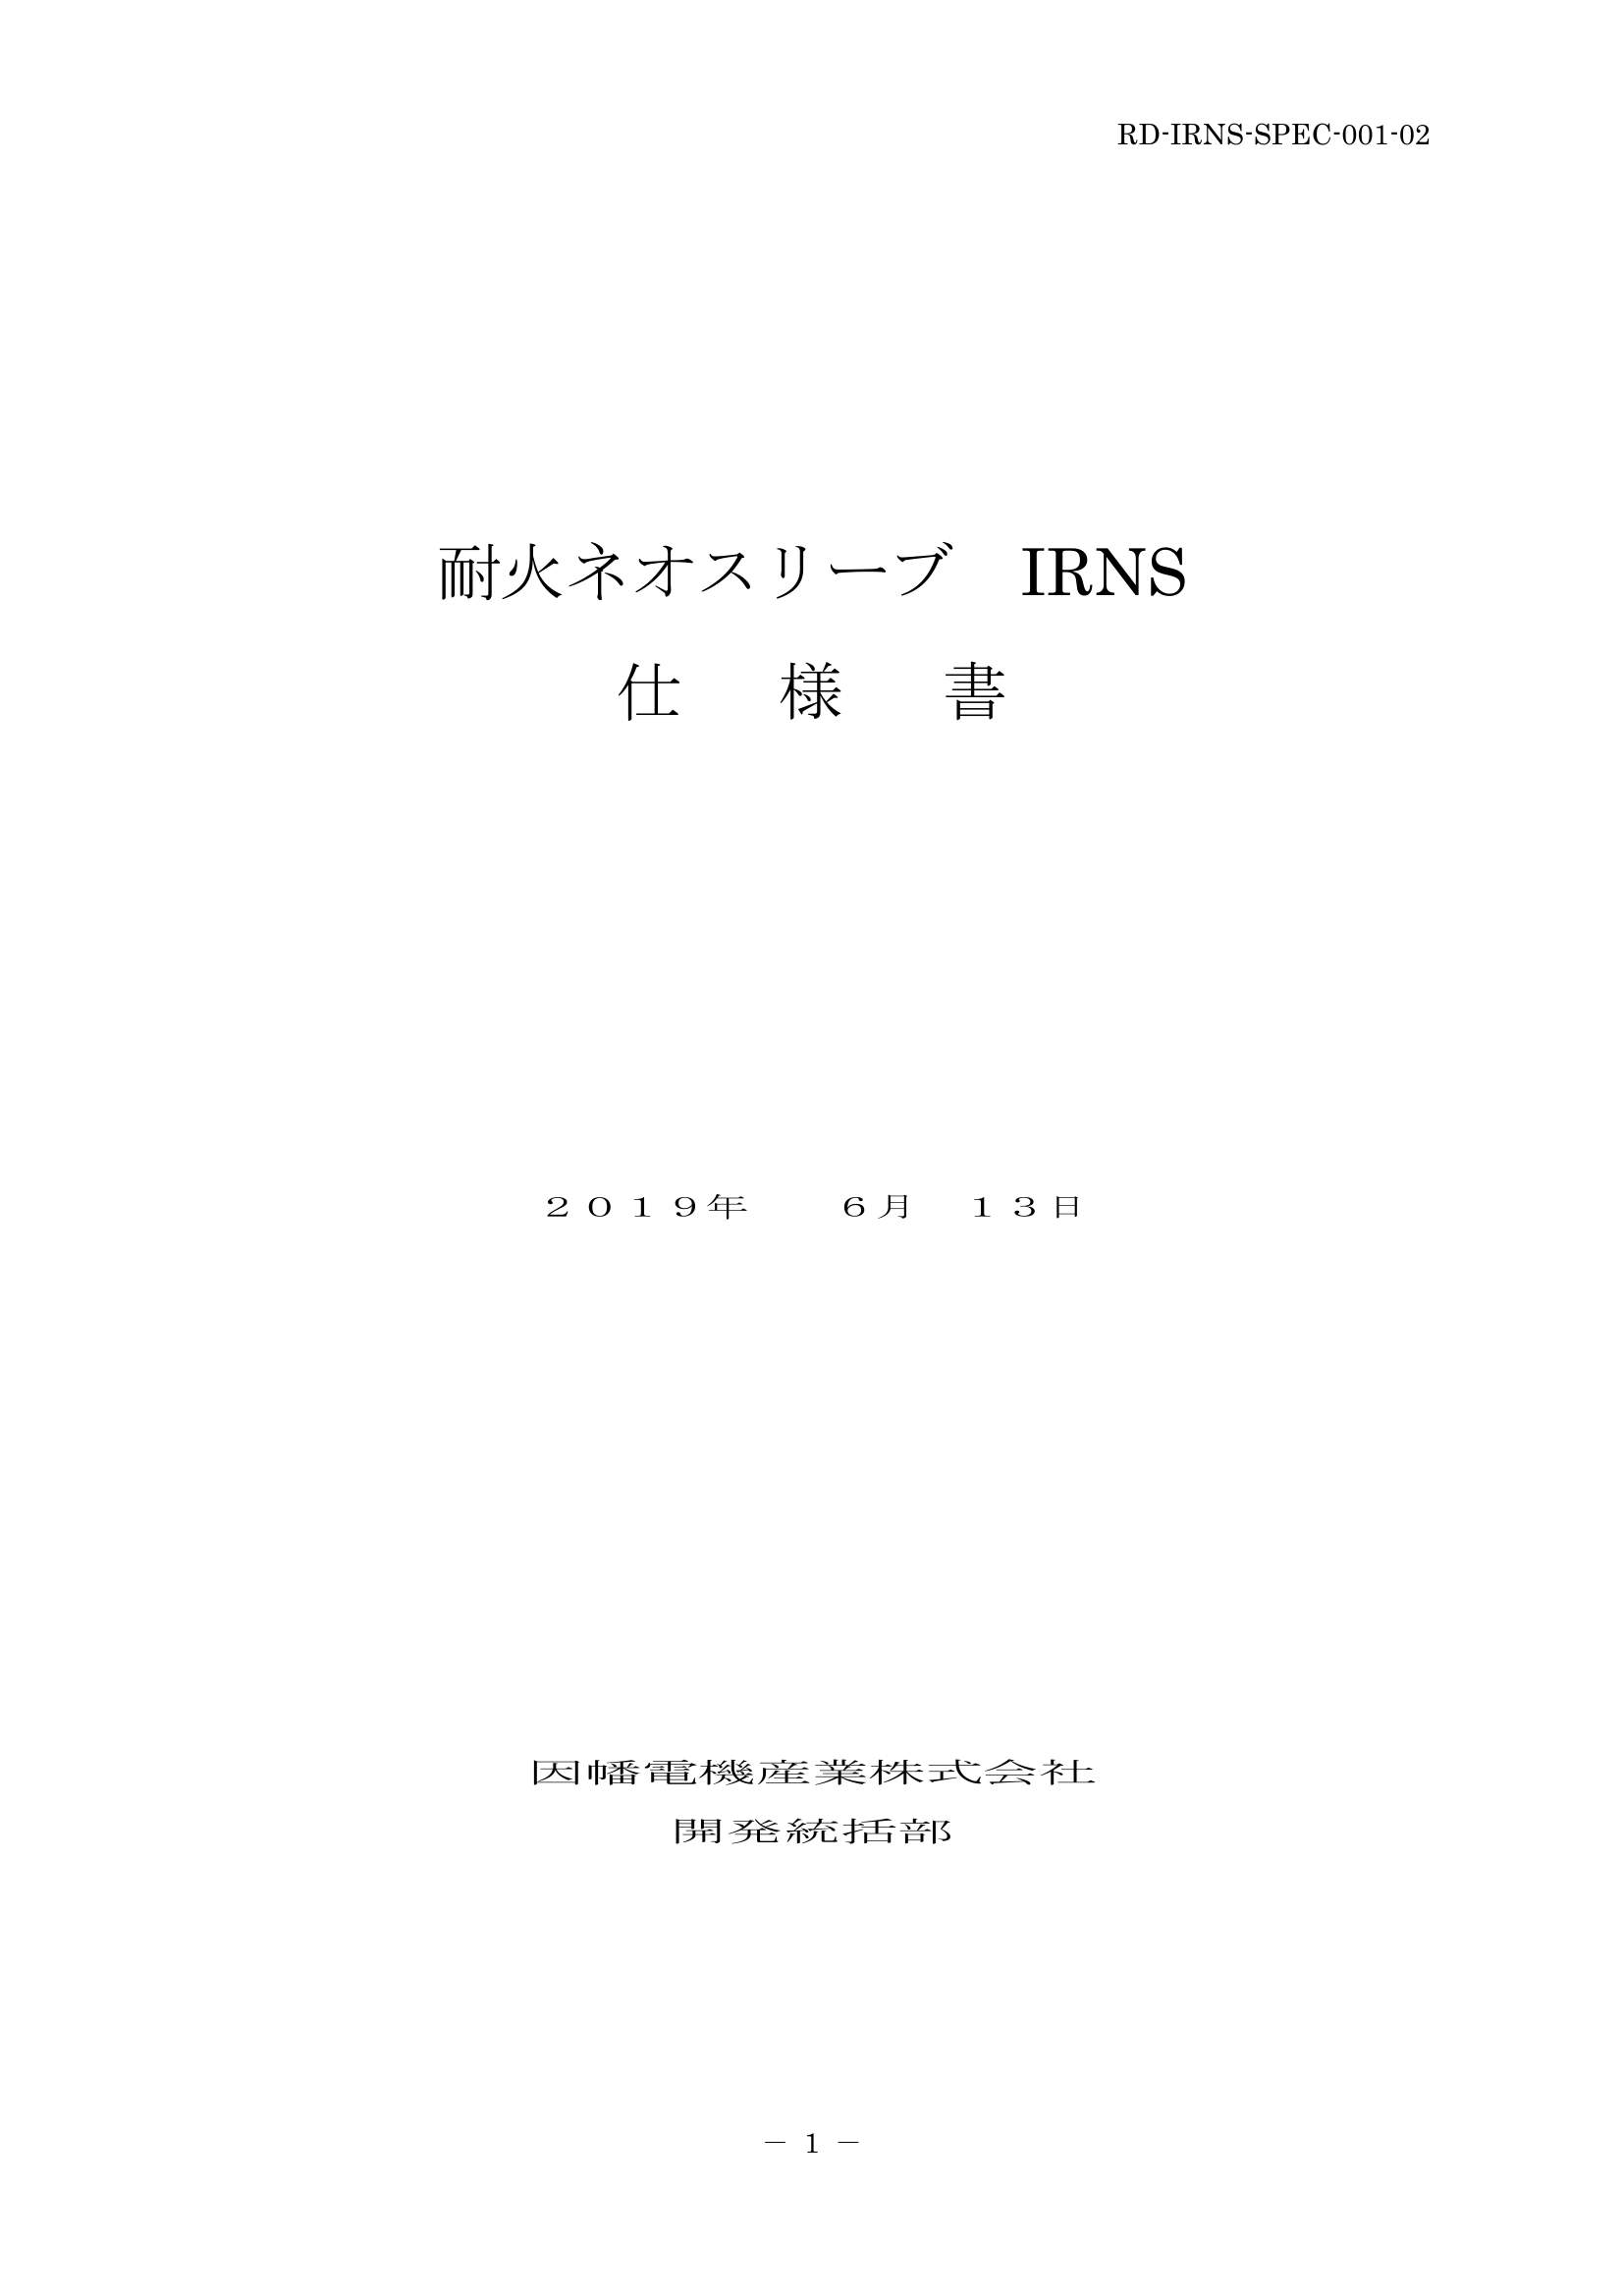 IRNS_仕様書_20190613-0W.pdf